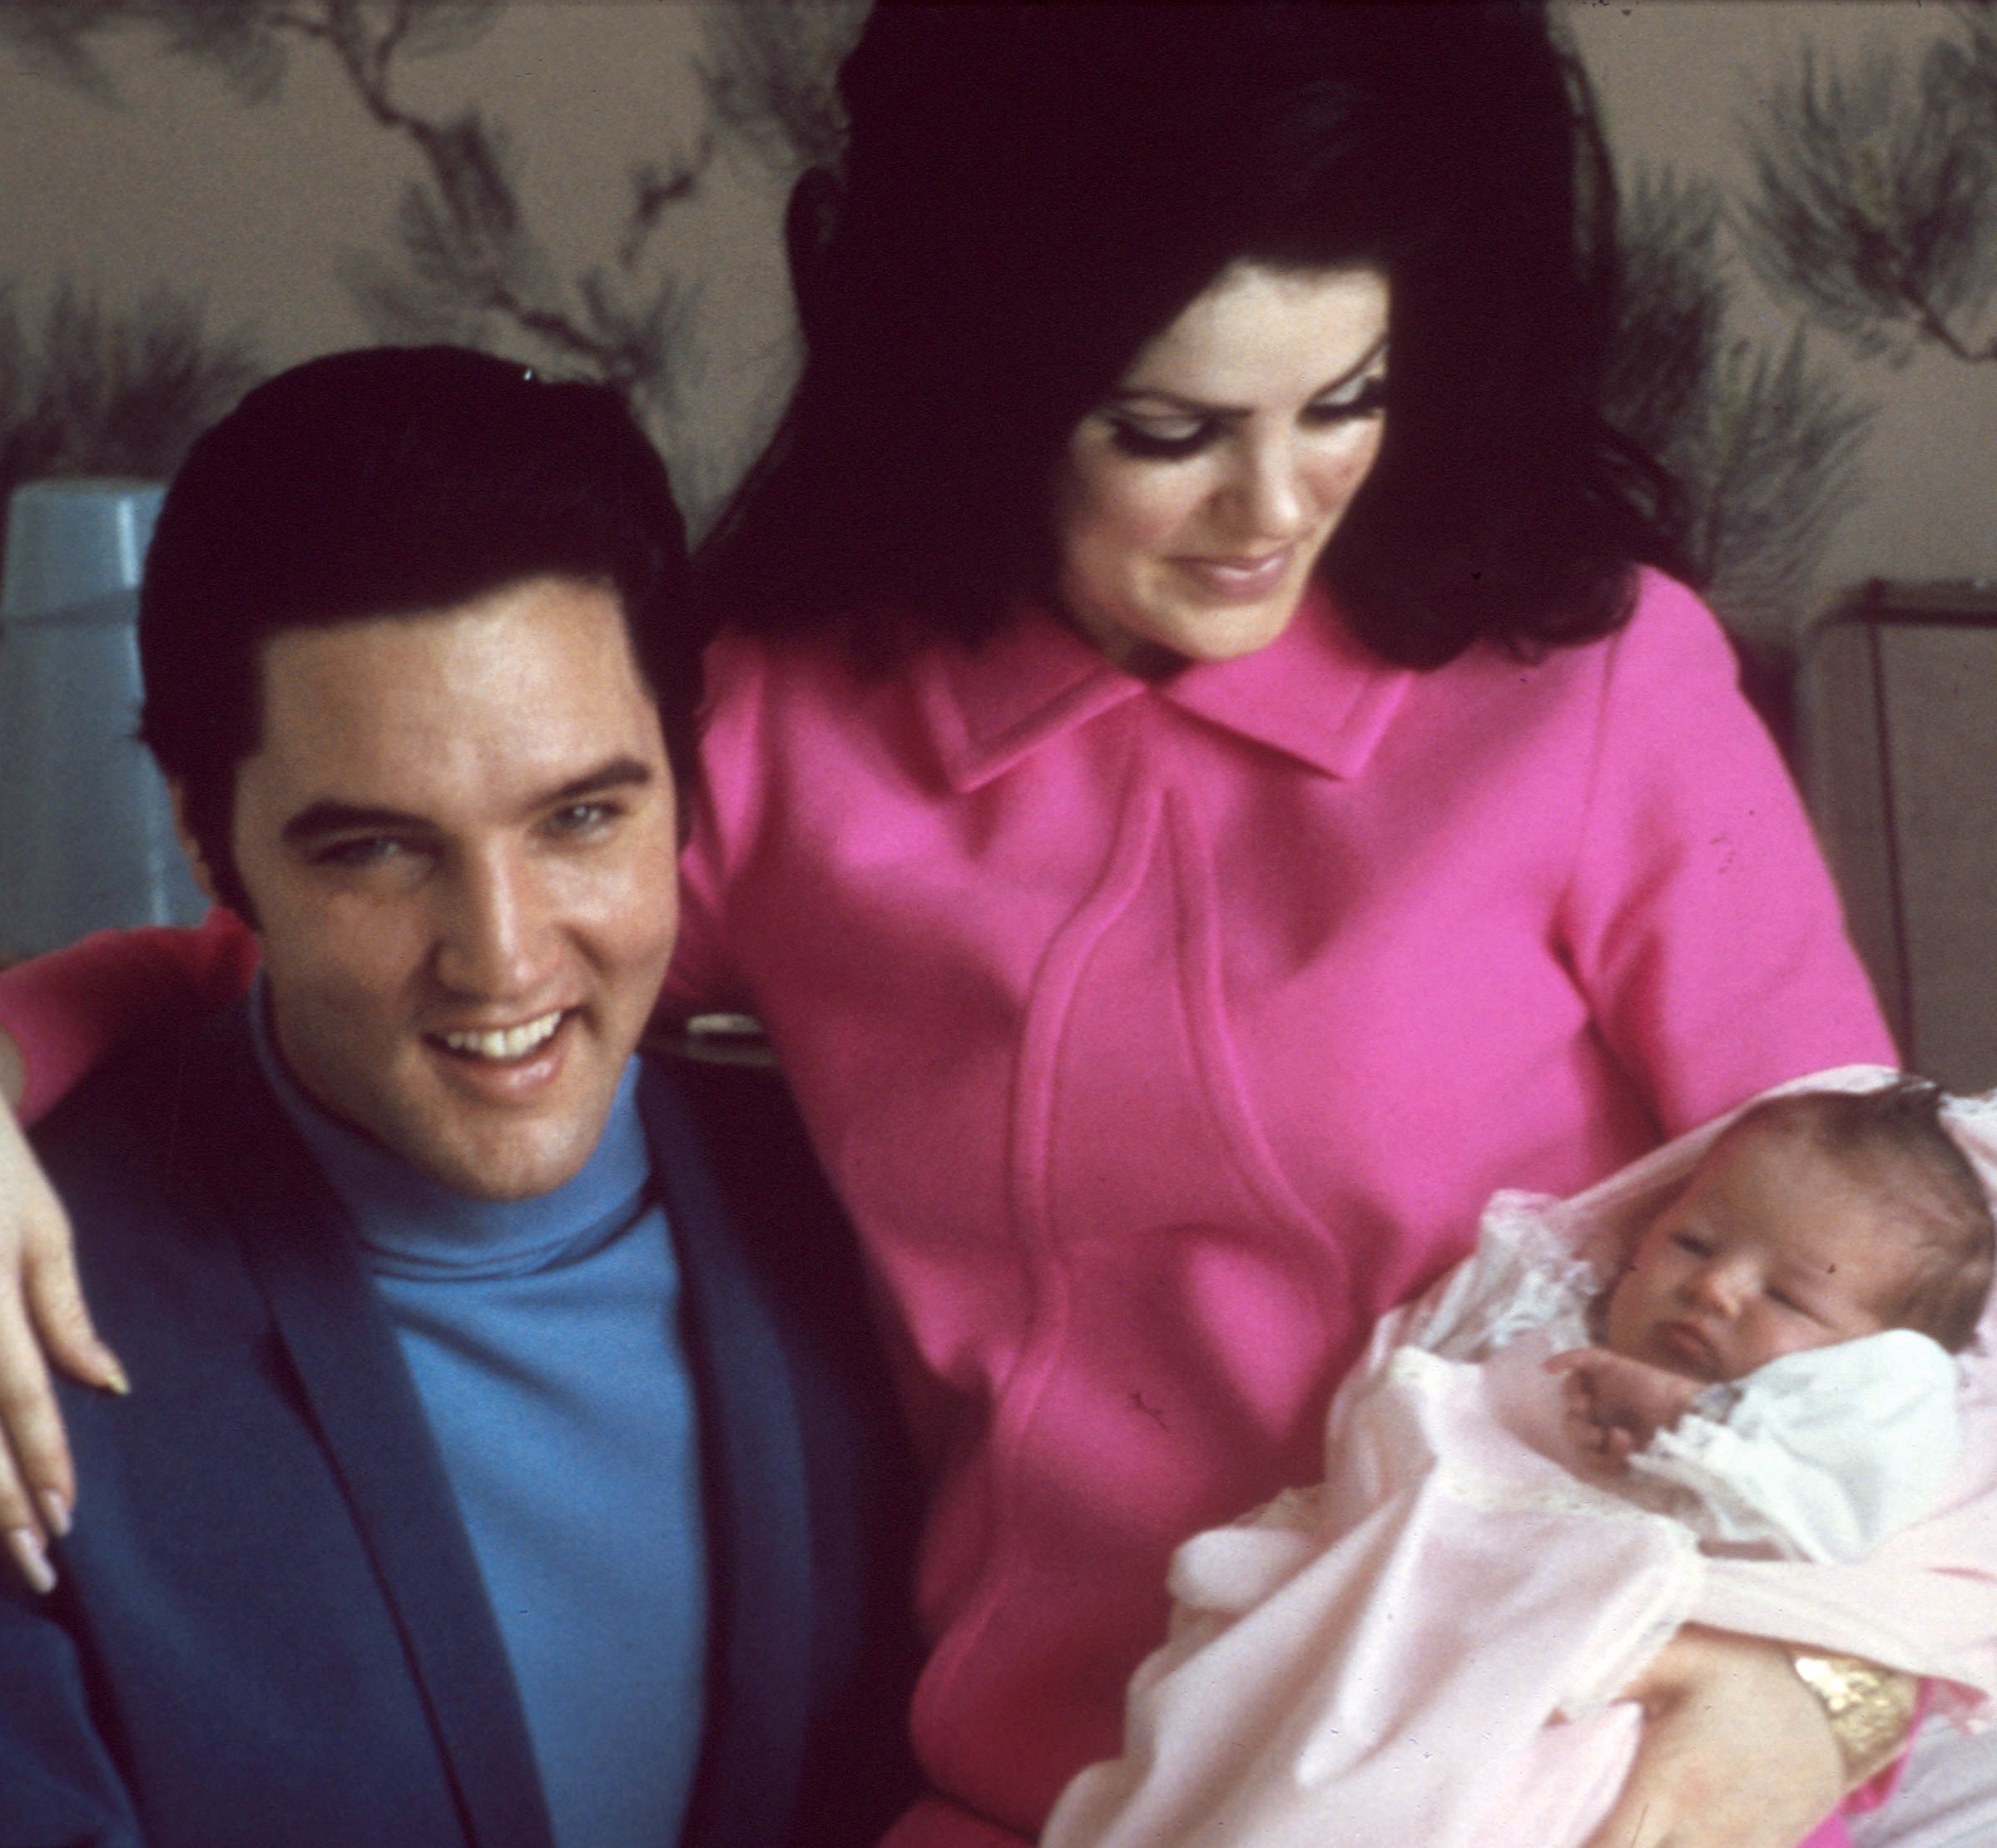  Elvis Presley with Priscilla Presley and their daughter Lisa Marie Presley